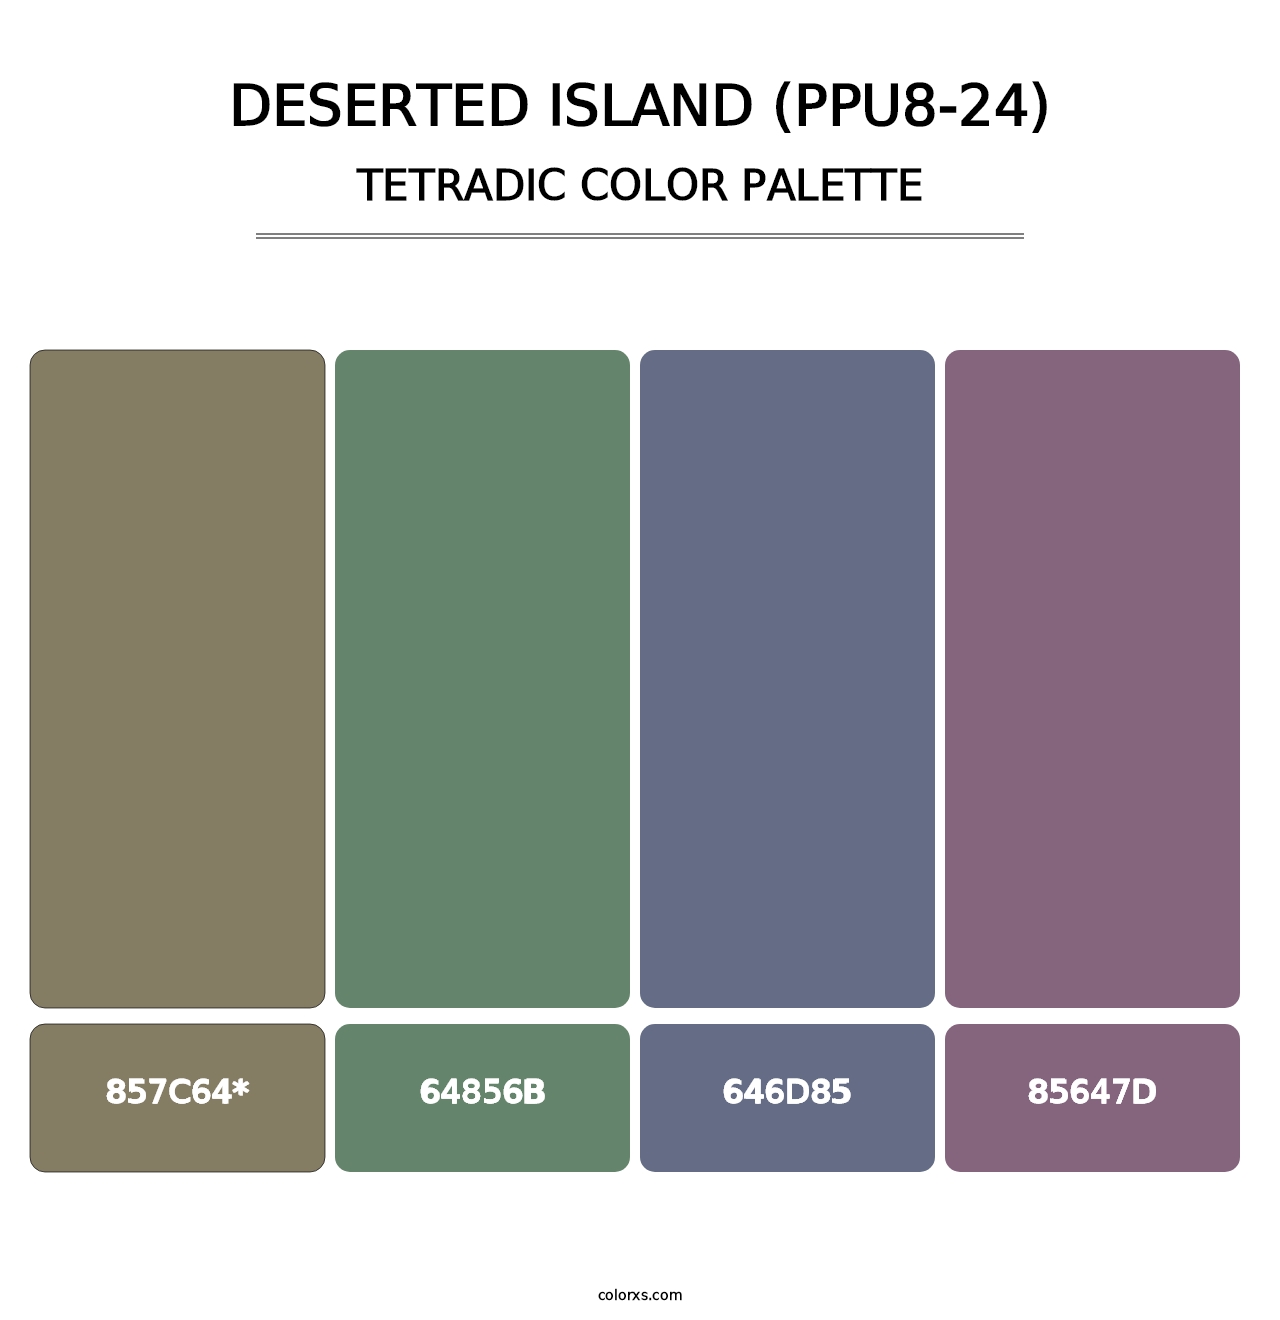 Deserted Island (PPU8-24) - Tetradic Color Palette